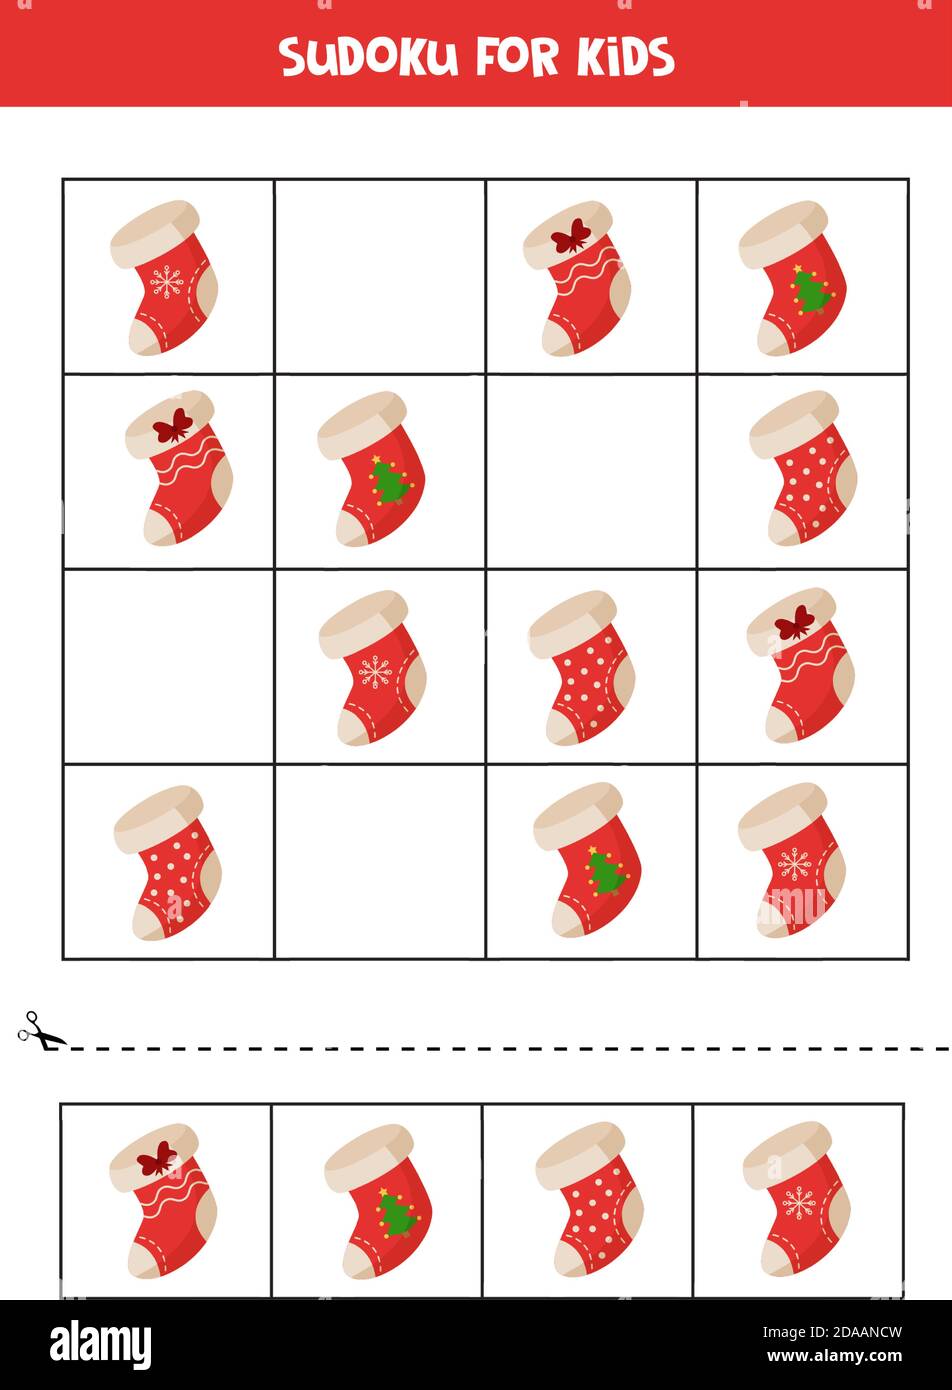 Sudoku game for kids. Set of Christmas socks. Stock Vector